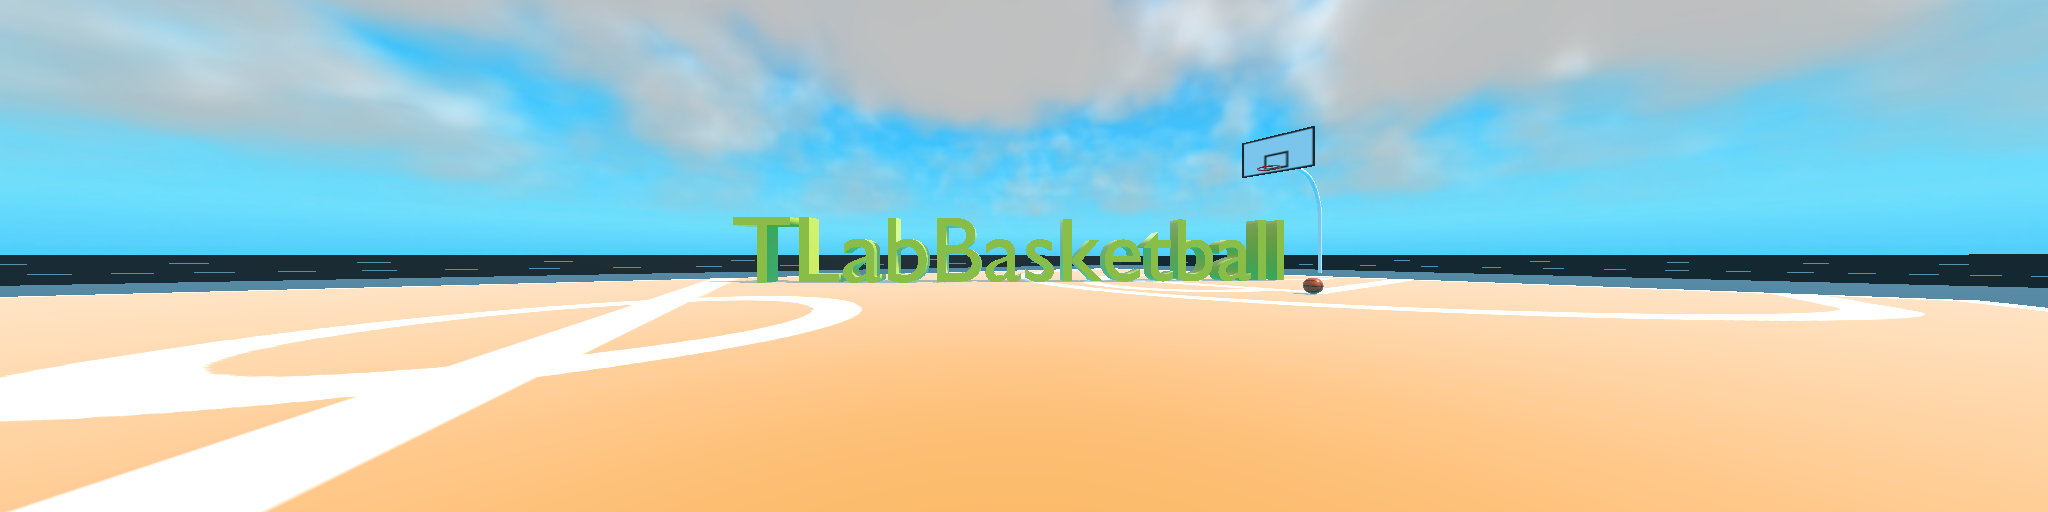 TLabBasketball_VR